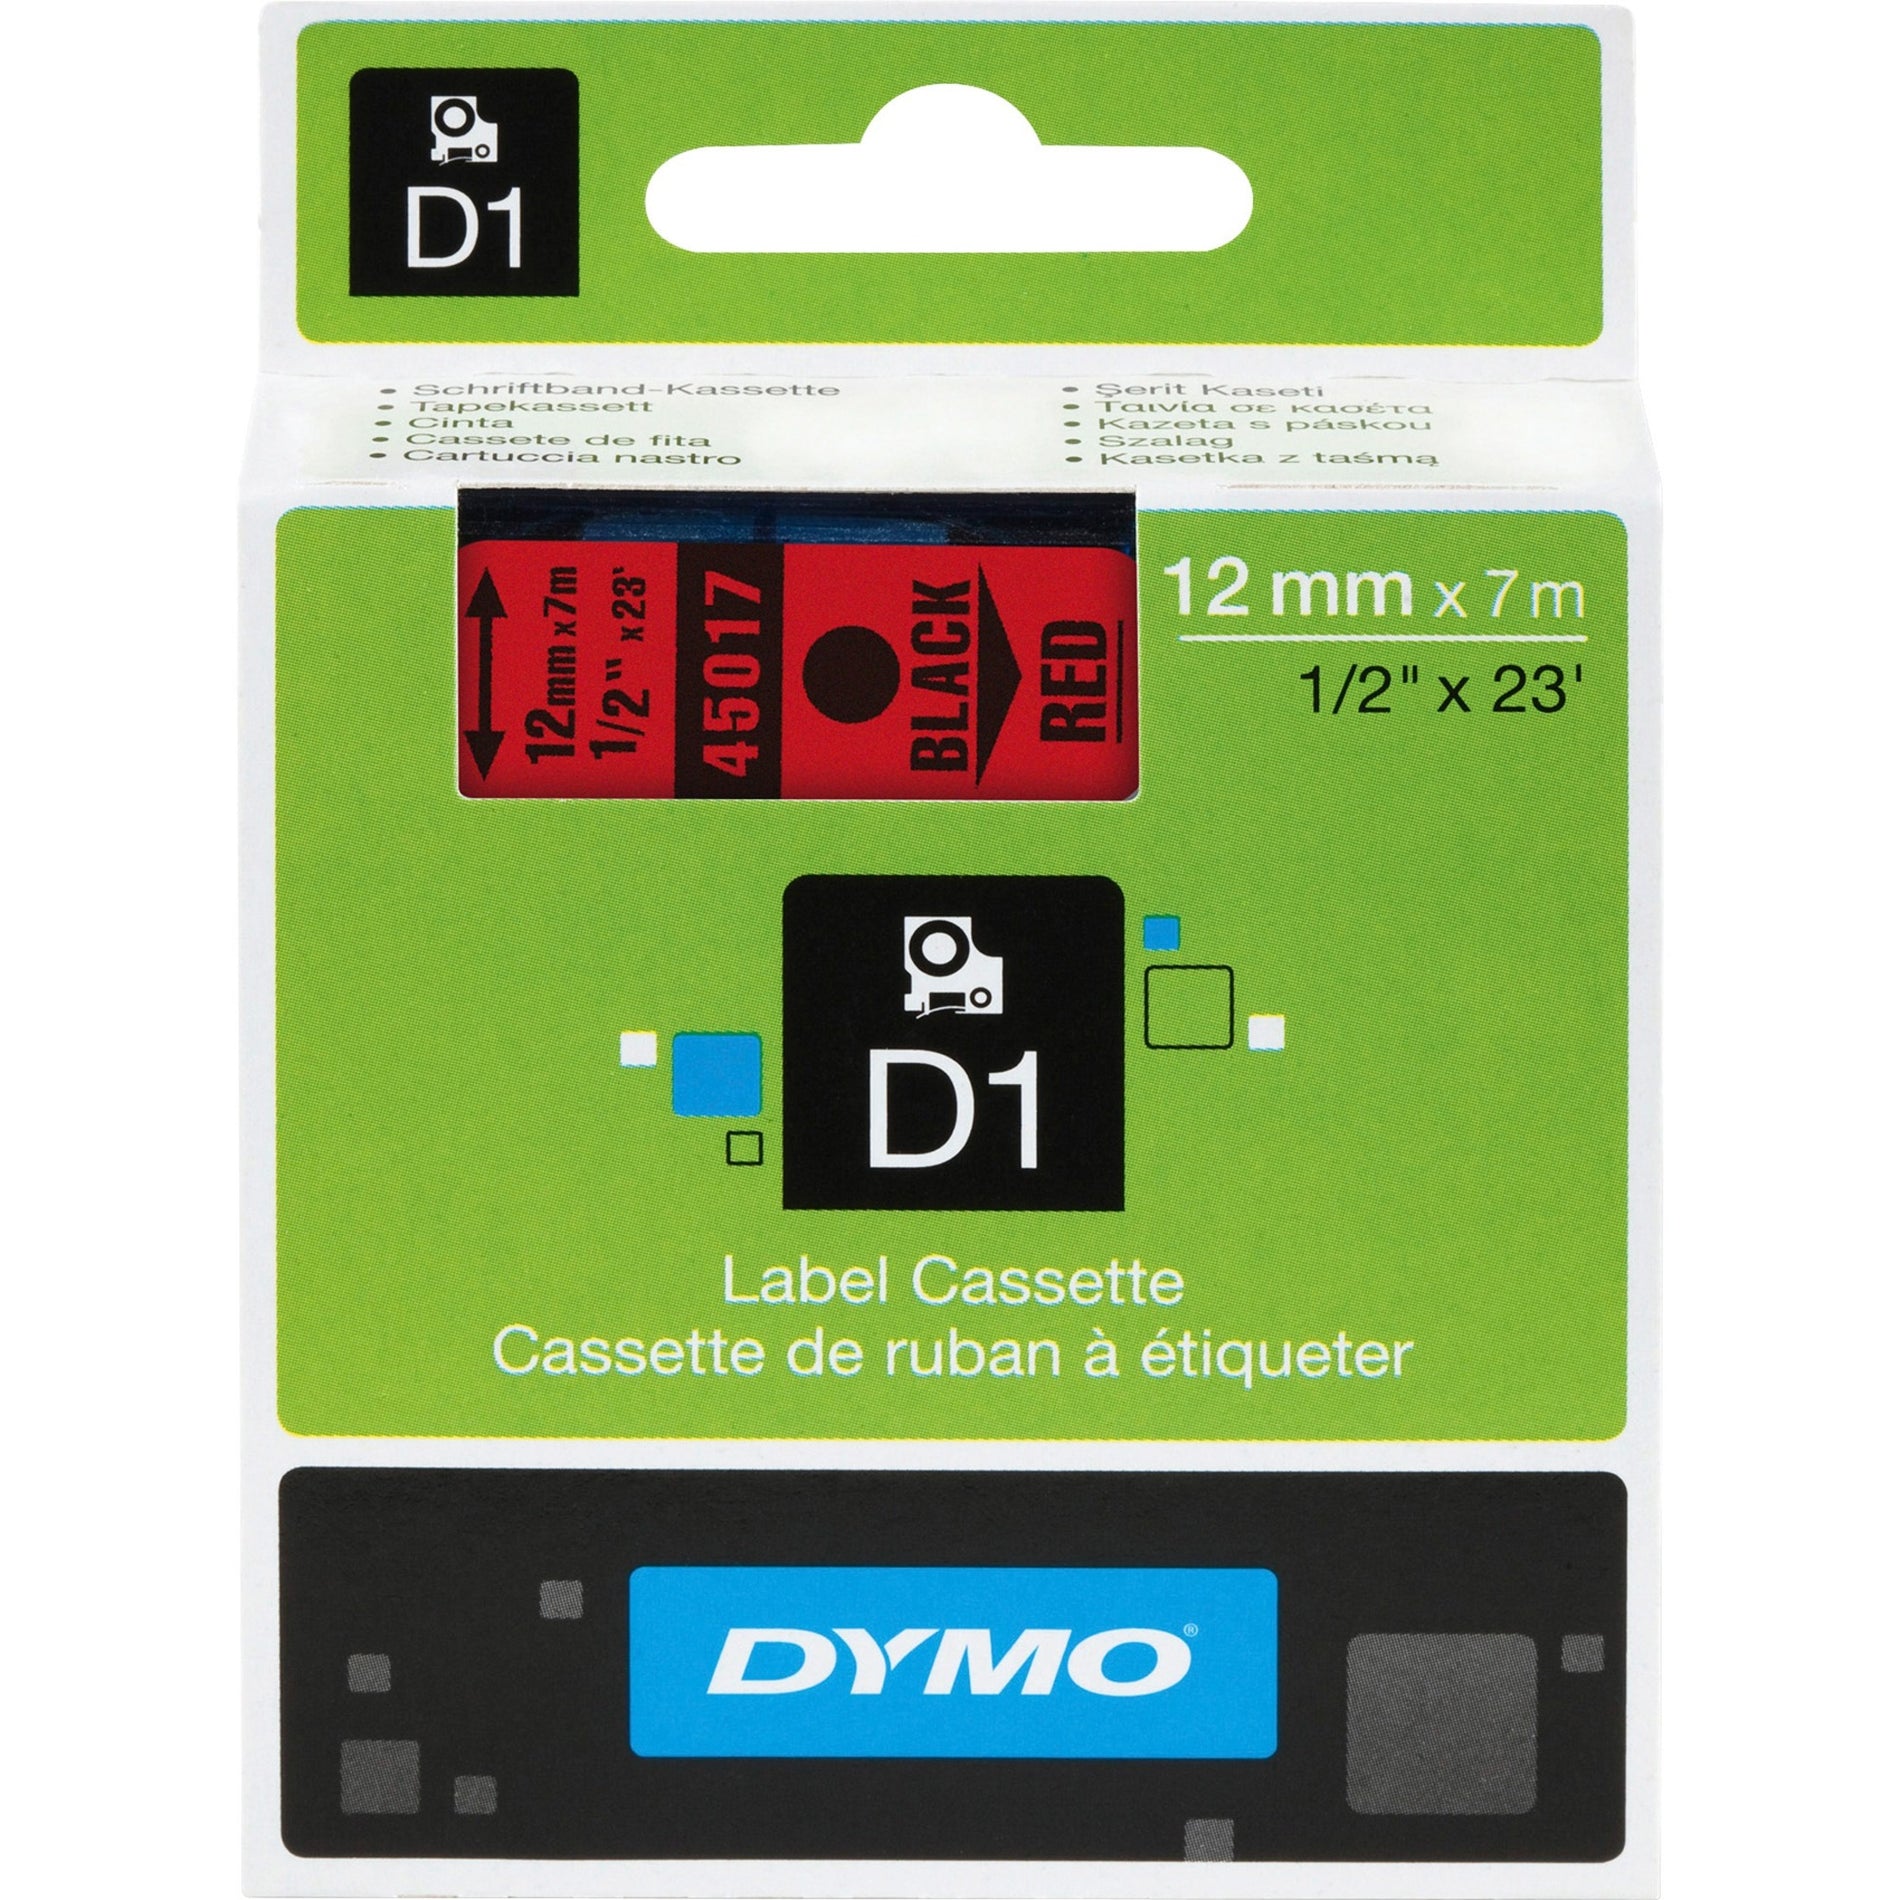 Dymo 45017 Electronic Labeler D1 Label Cassette, 1/2"x23', Red/Black Tape Cartridge